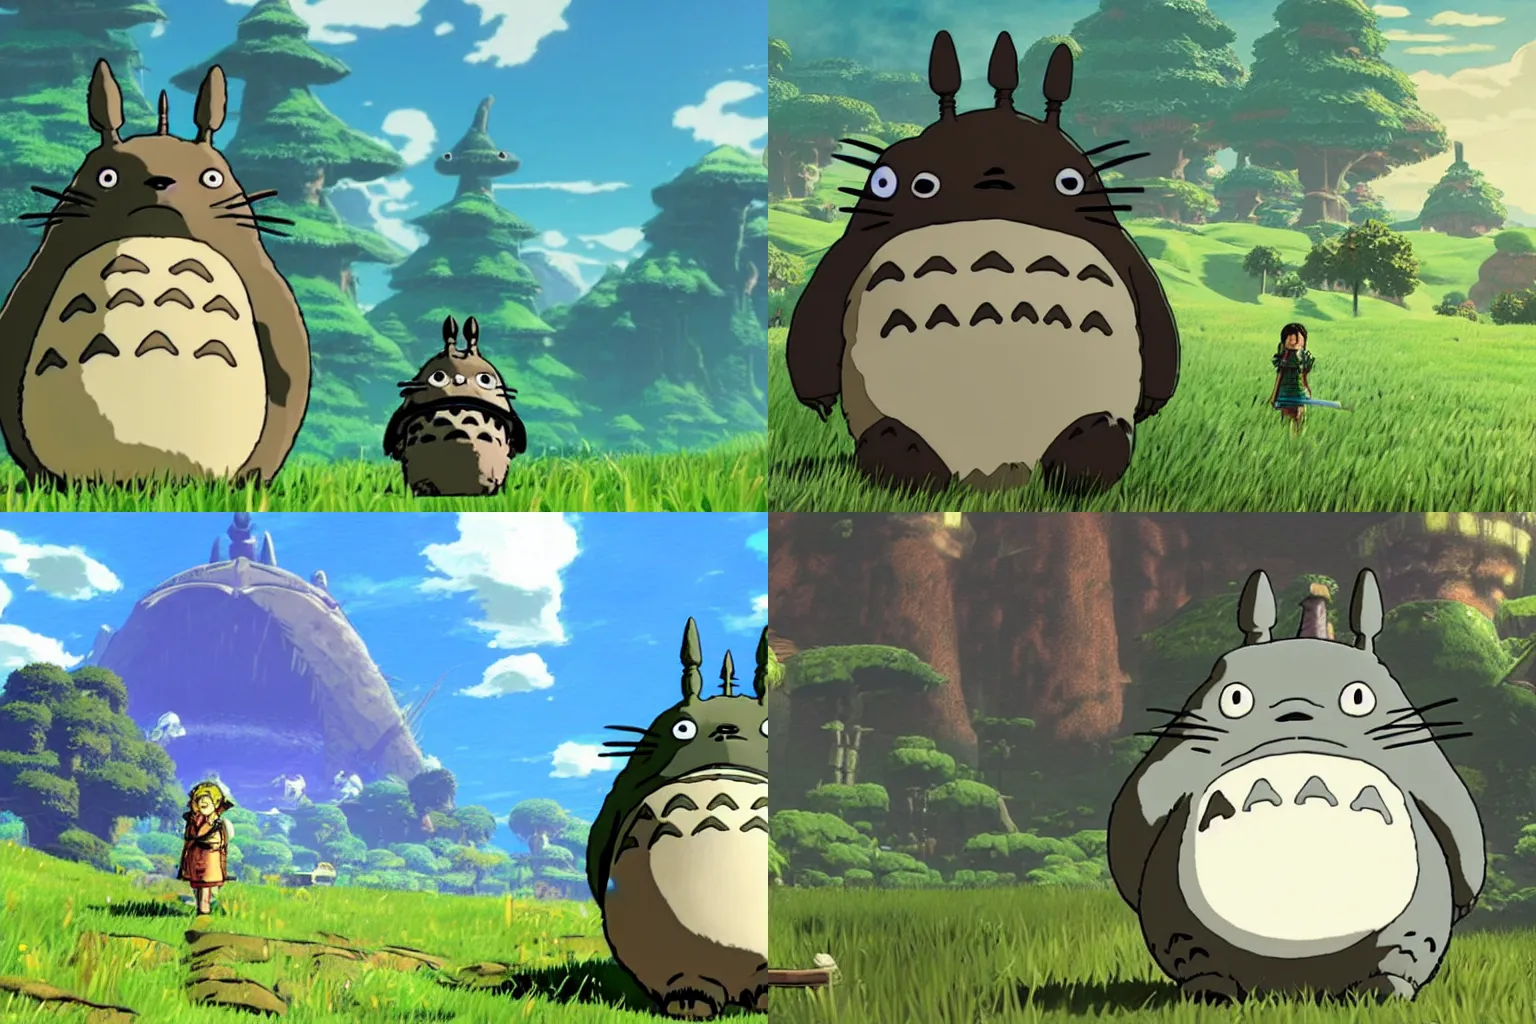 Prompt: Totoro in BOTW